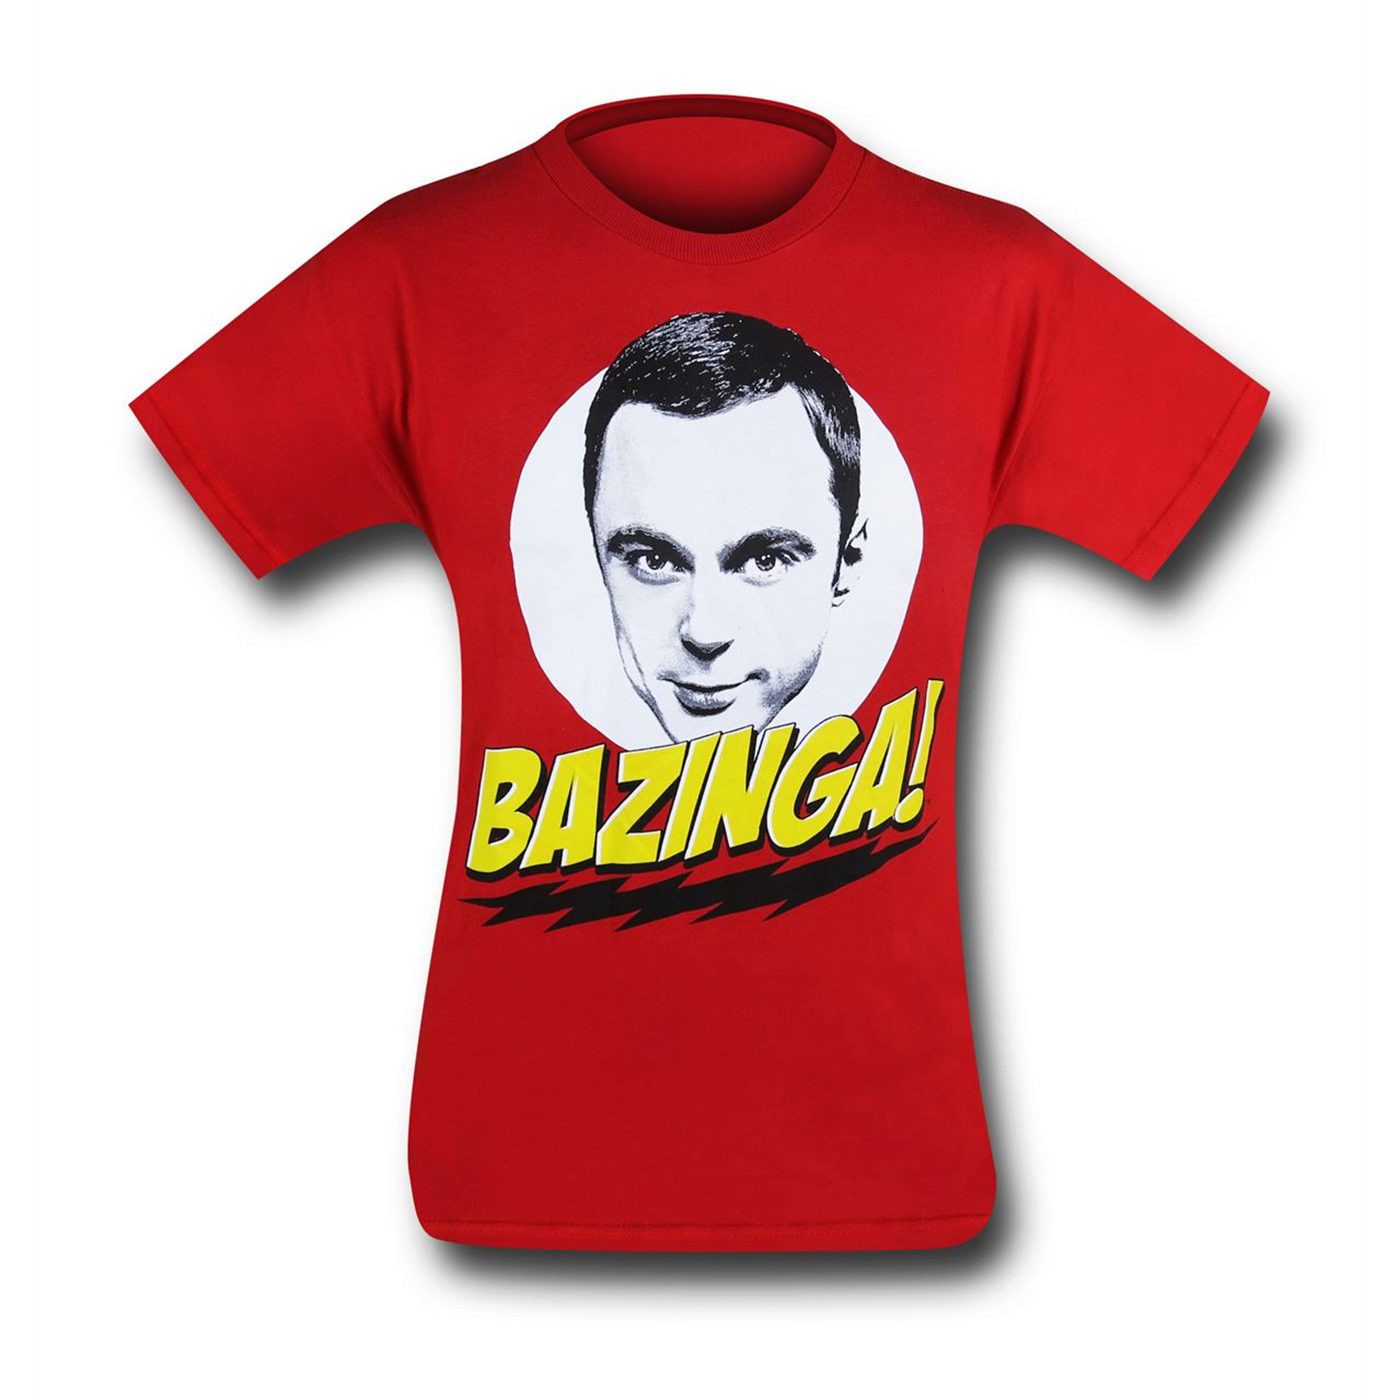 sheldon bazinga shirt